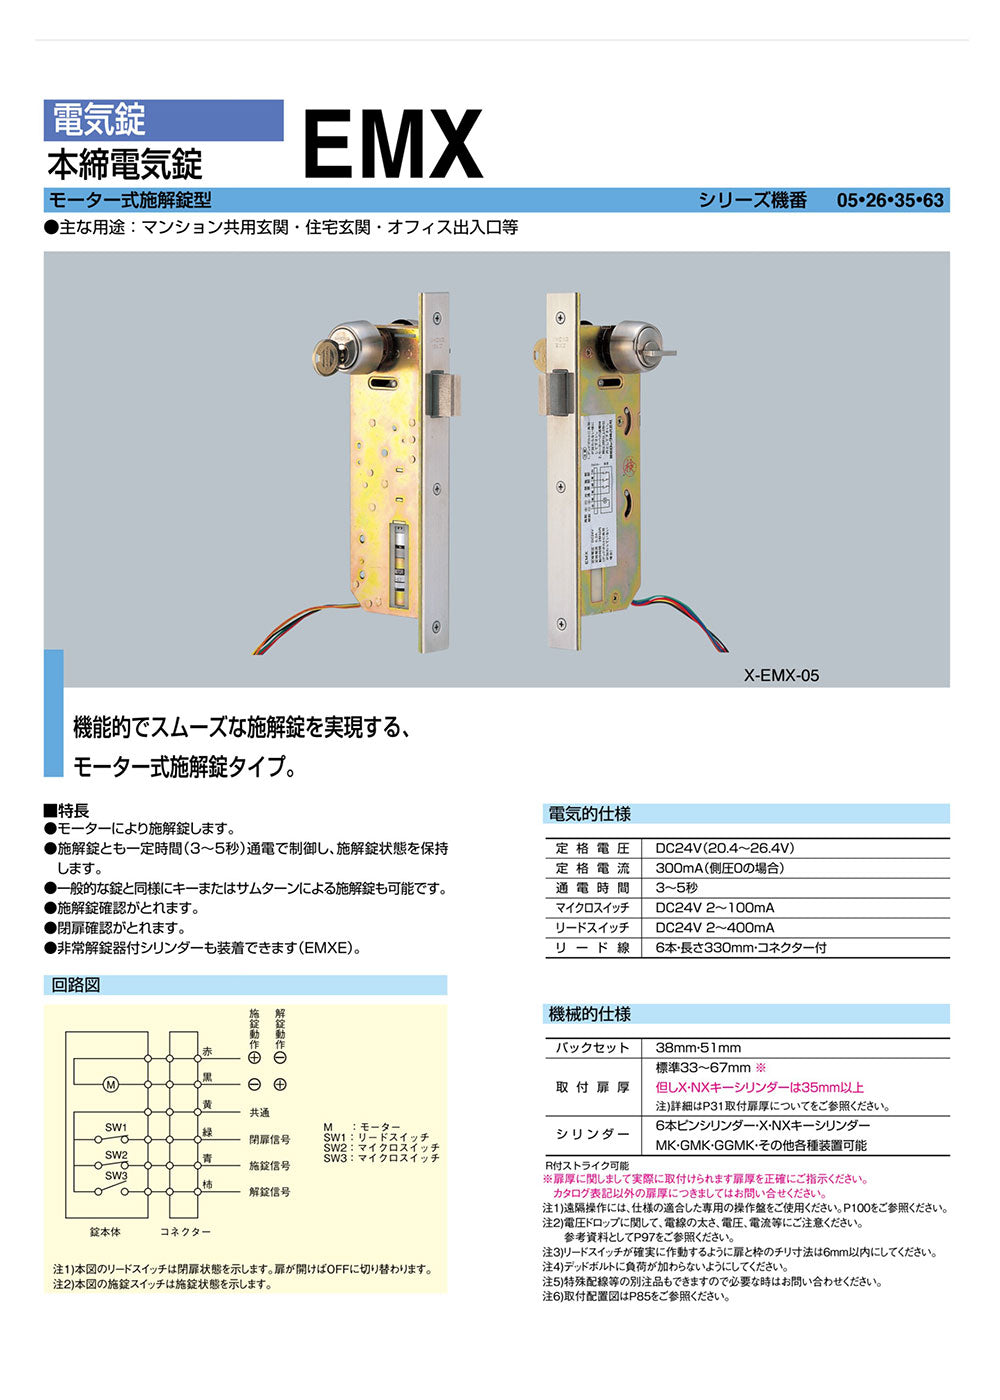 SHOWA EMX-05 本締電気錠/モーター式施解錠型